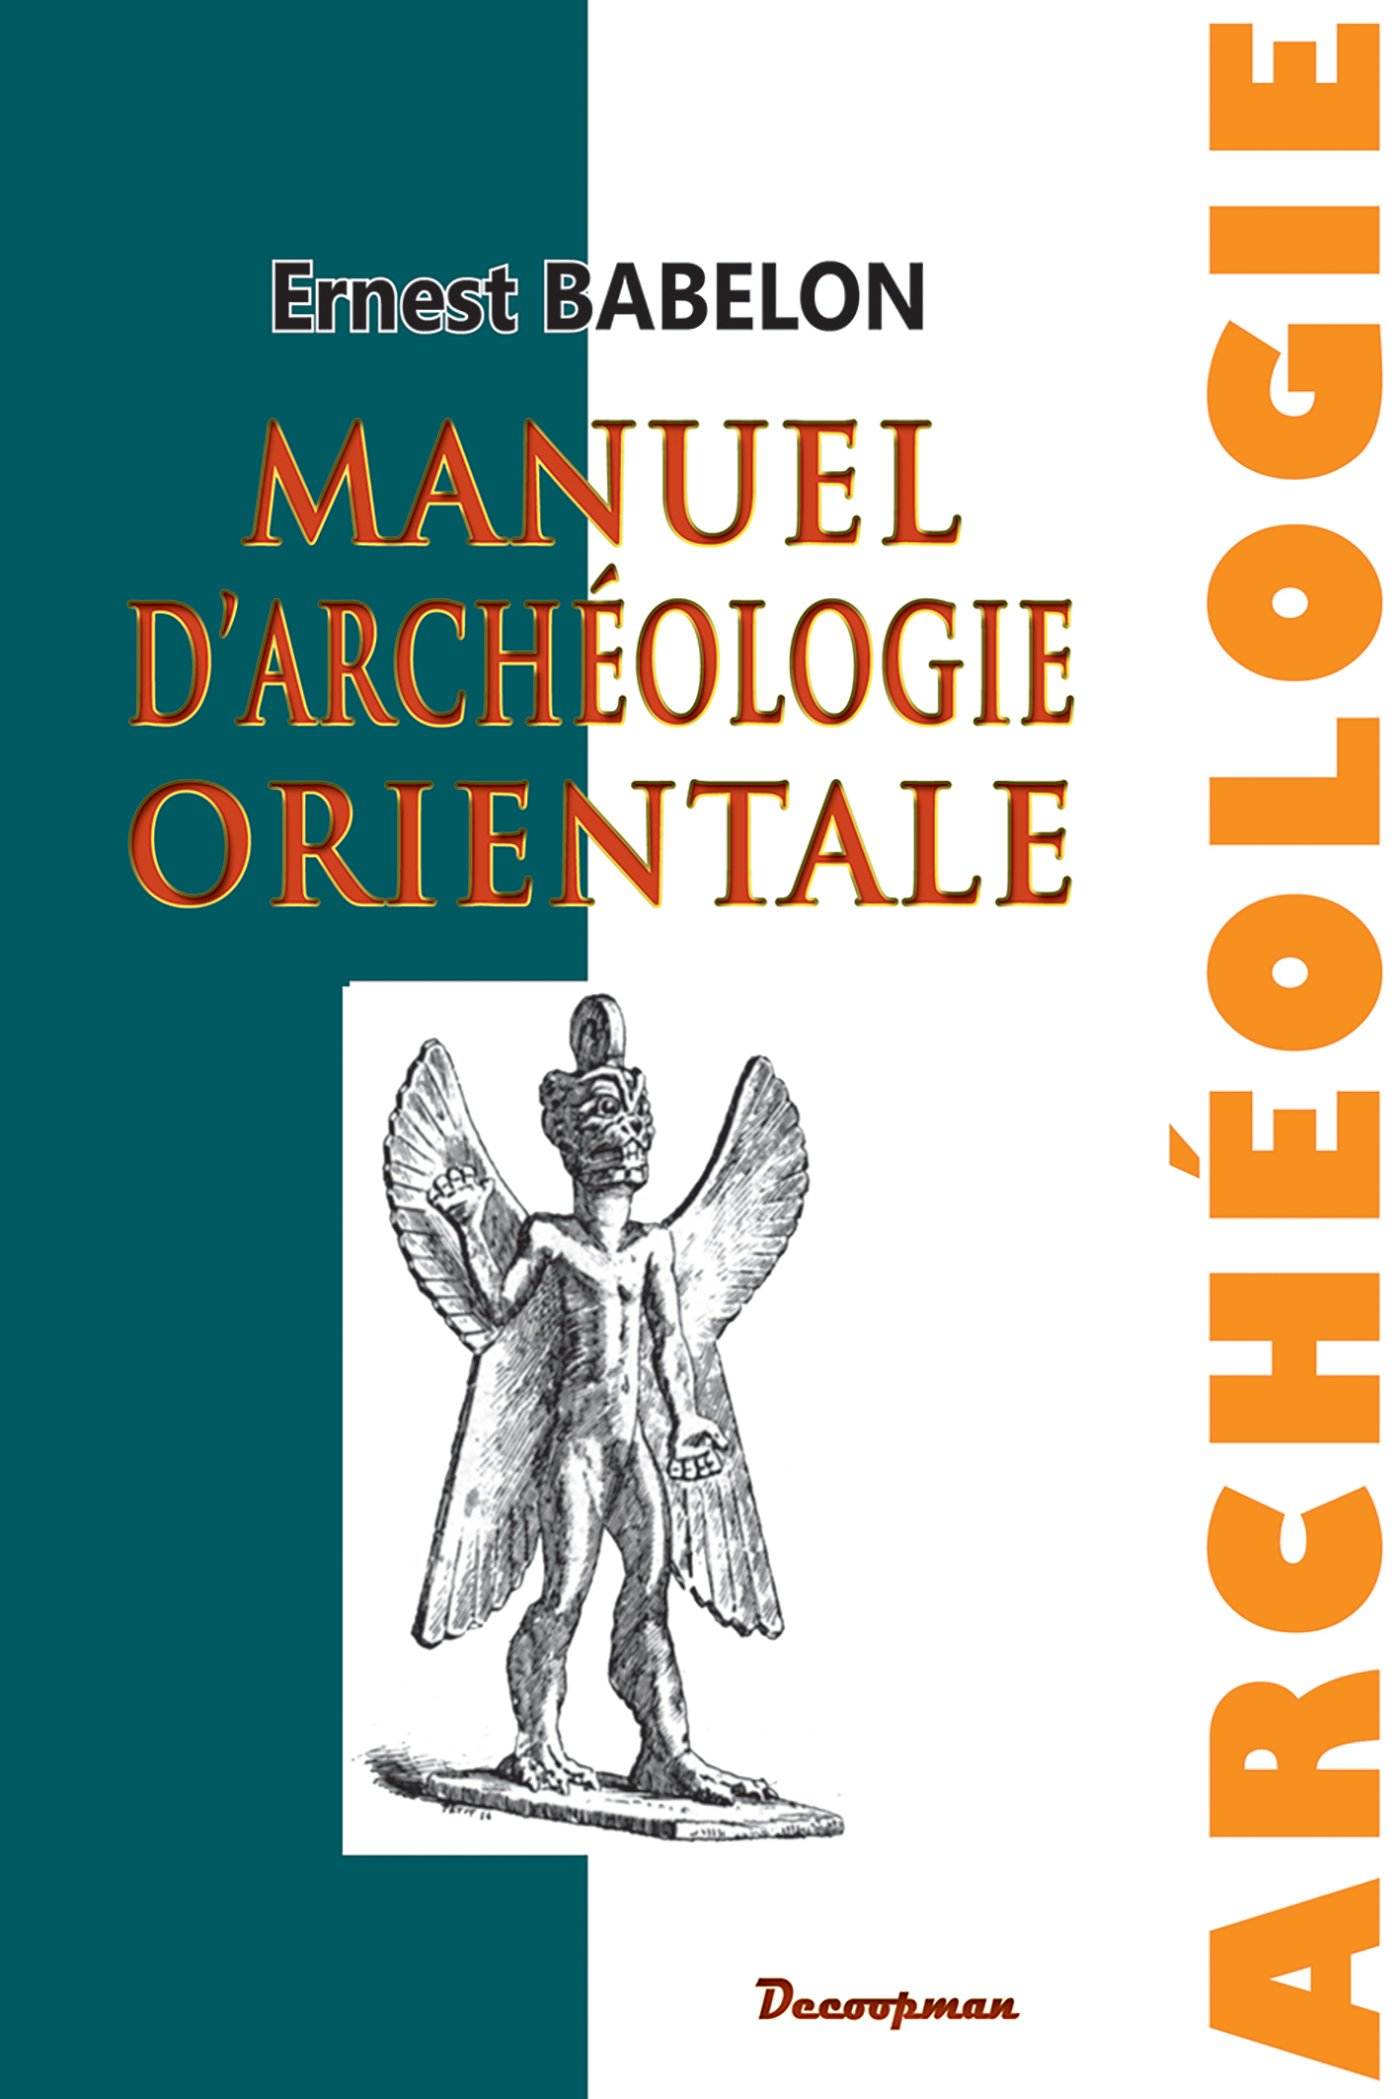 Manuel d'archéologie orientale, 2016, 248 p.